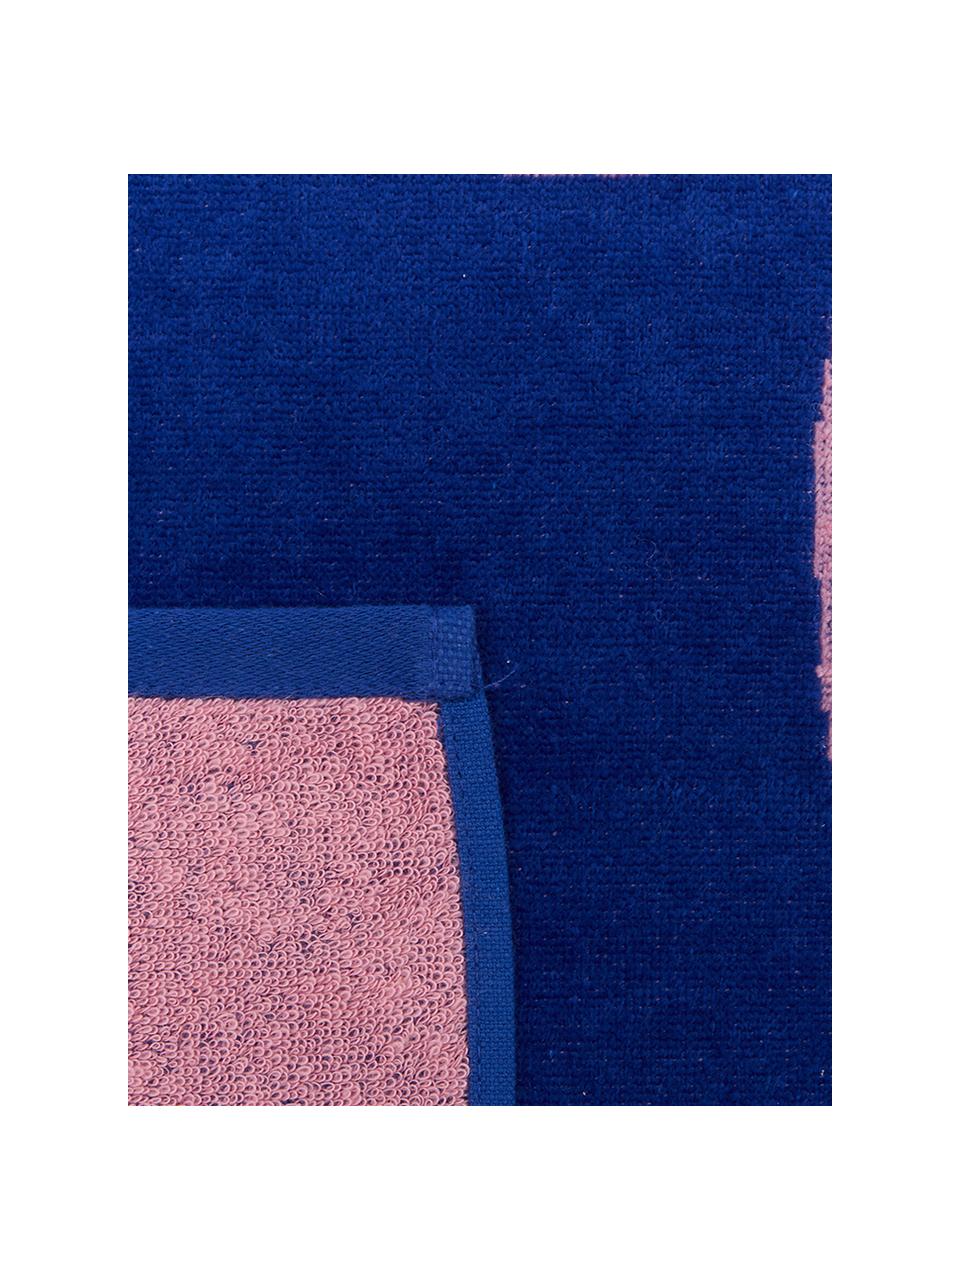 Strandlaken Mingo, Katoen
Lichte kwaliteit 380 g/m², Blauw, roze, 80 x 160 cm